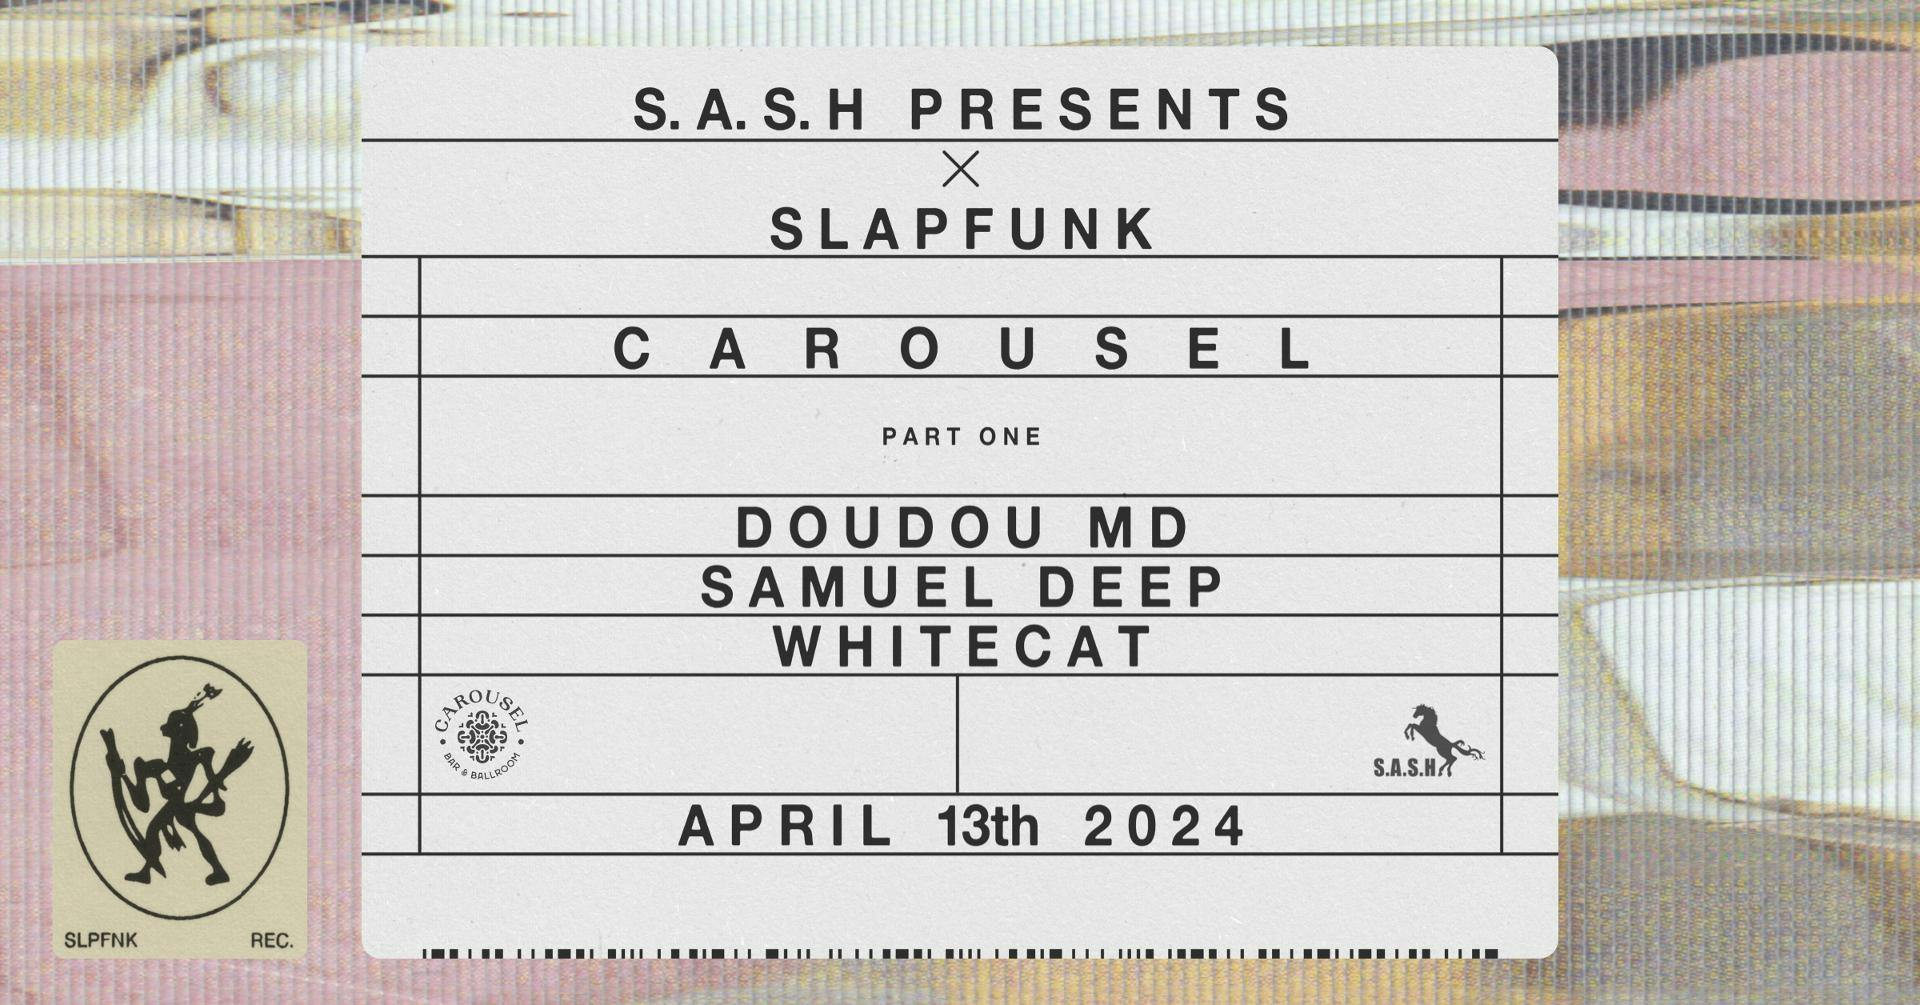 ★ S.A.S.H Presents SLAPFUNK Part One ★ Doudou MD & Samuel Deep ★ Saturday April 13th ★